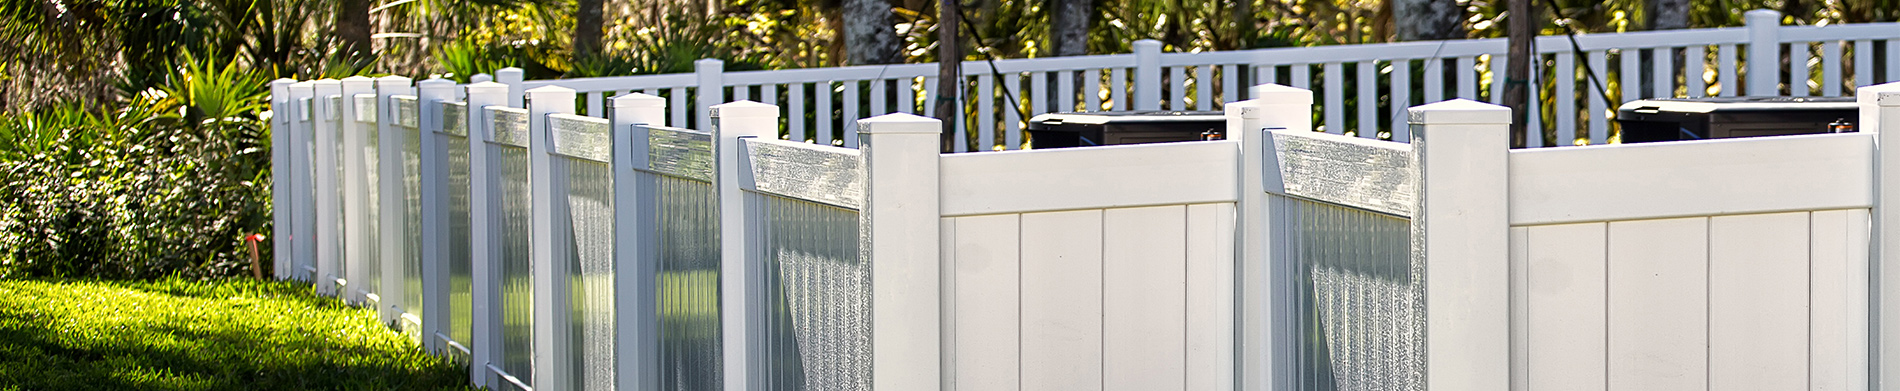 Vinyl fence gate